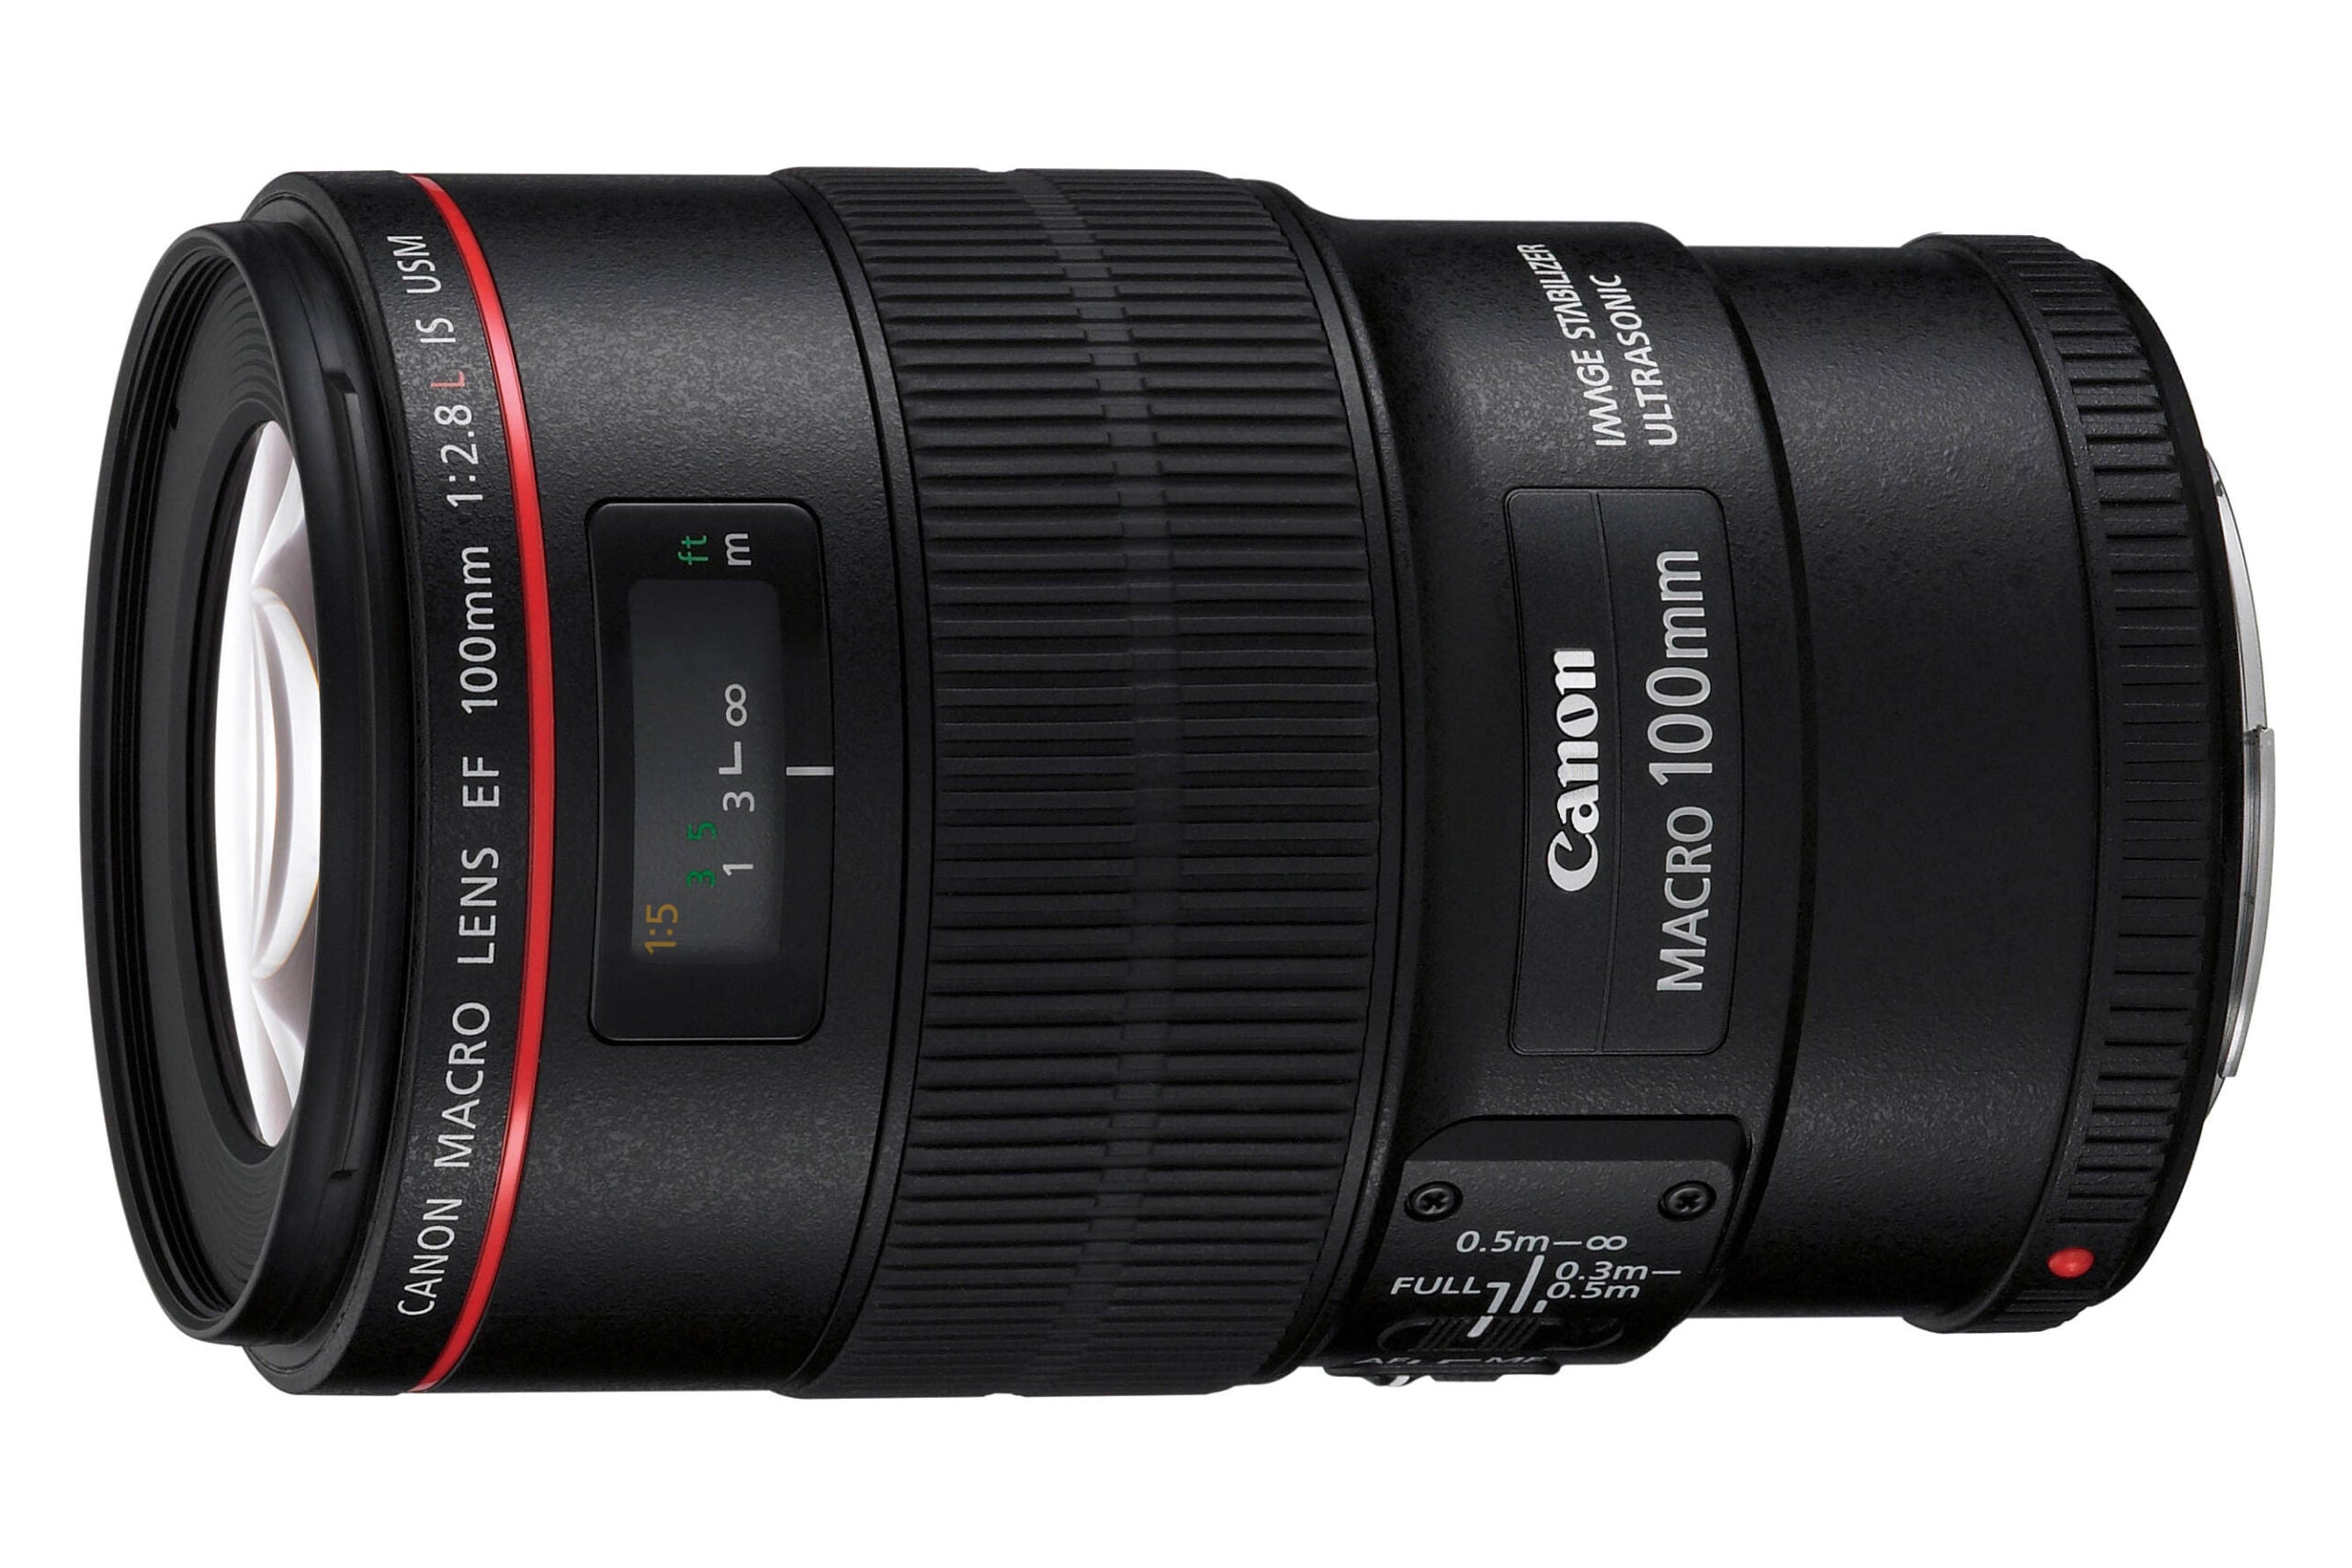 Canon EF 100mm f2.8 L Macro IS USM Lens - Product Photo 5 - Macro Lens